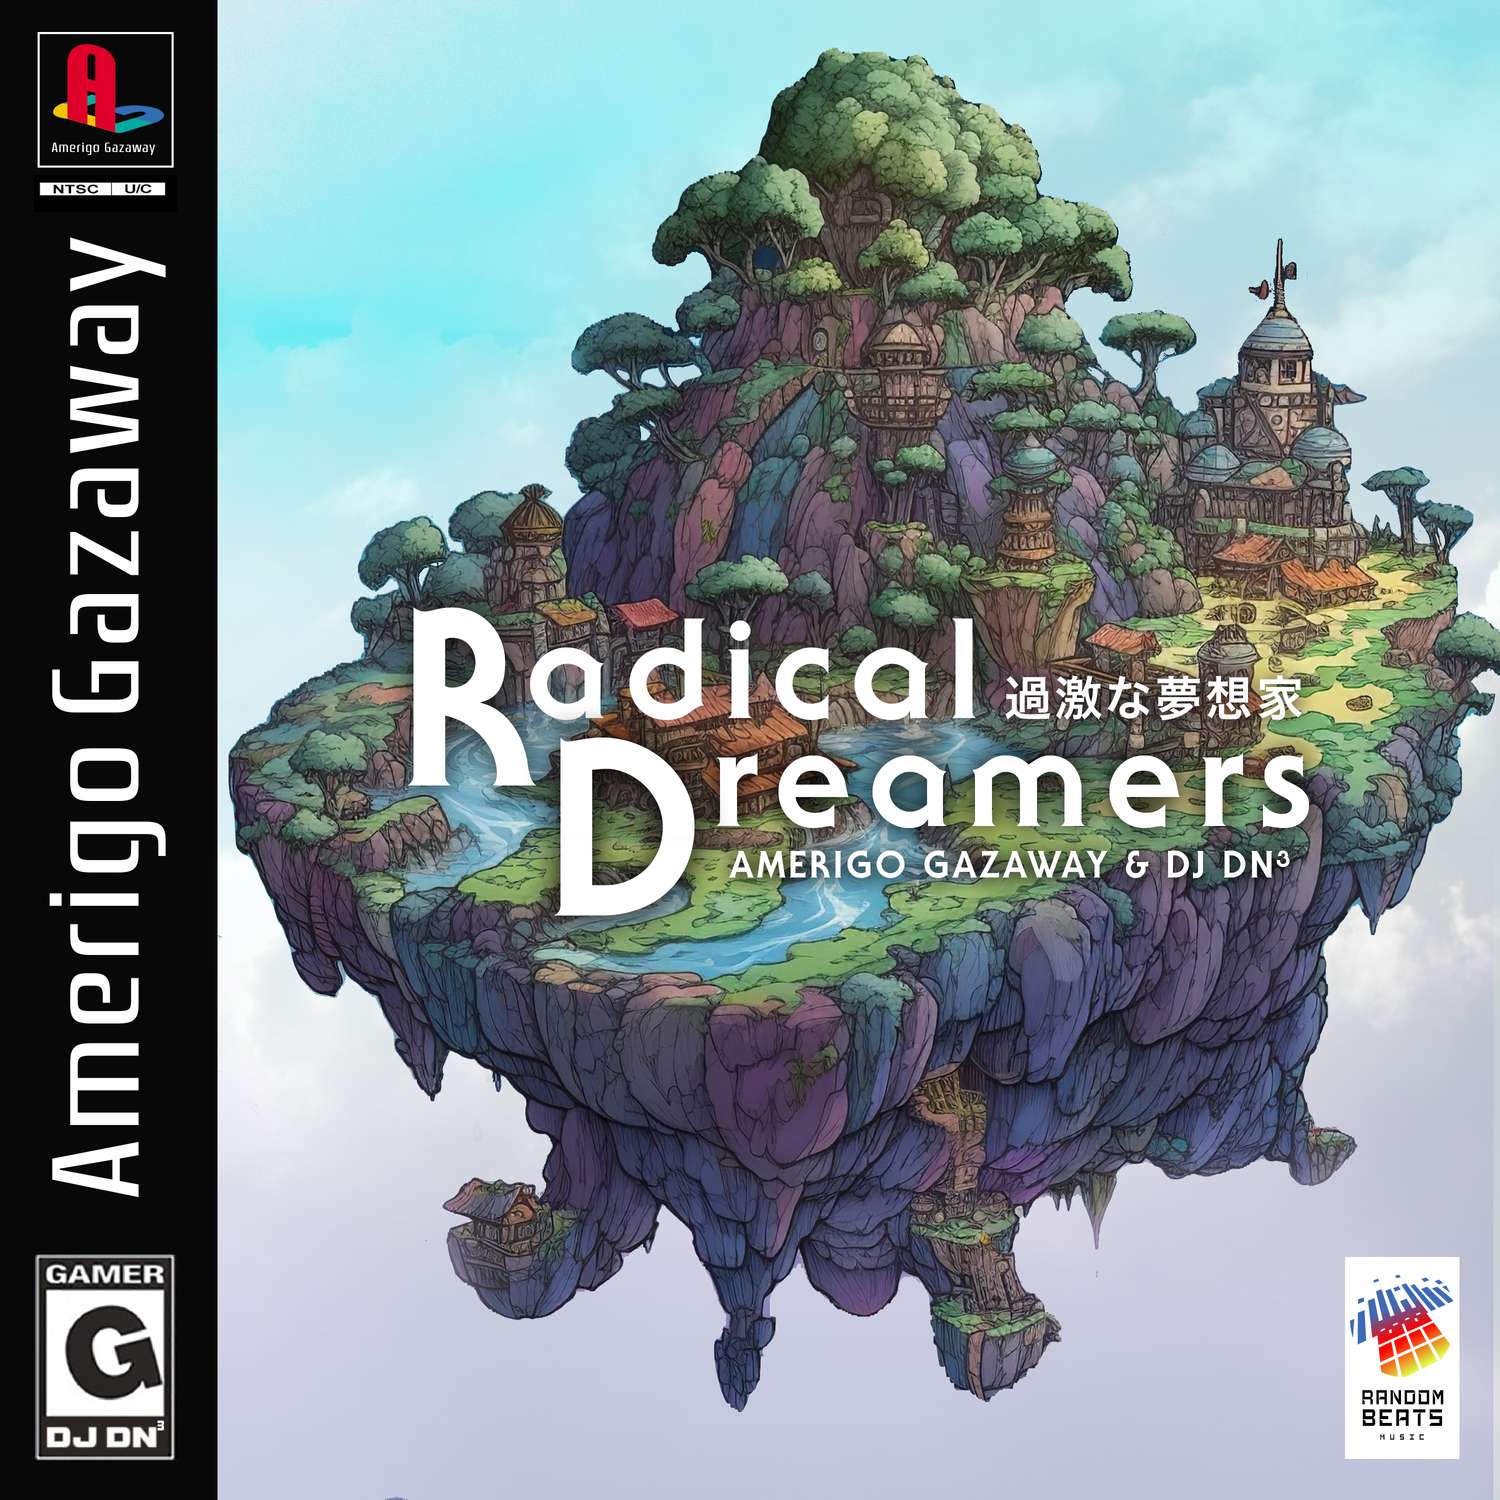 Amerigo Gazaway & DJ DN³ – Radical Dreamers (Album Stream)